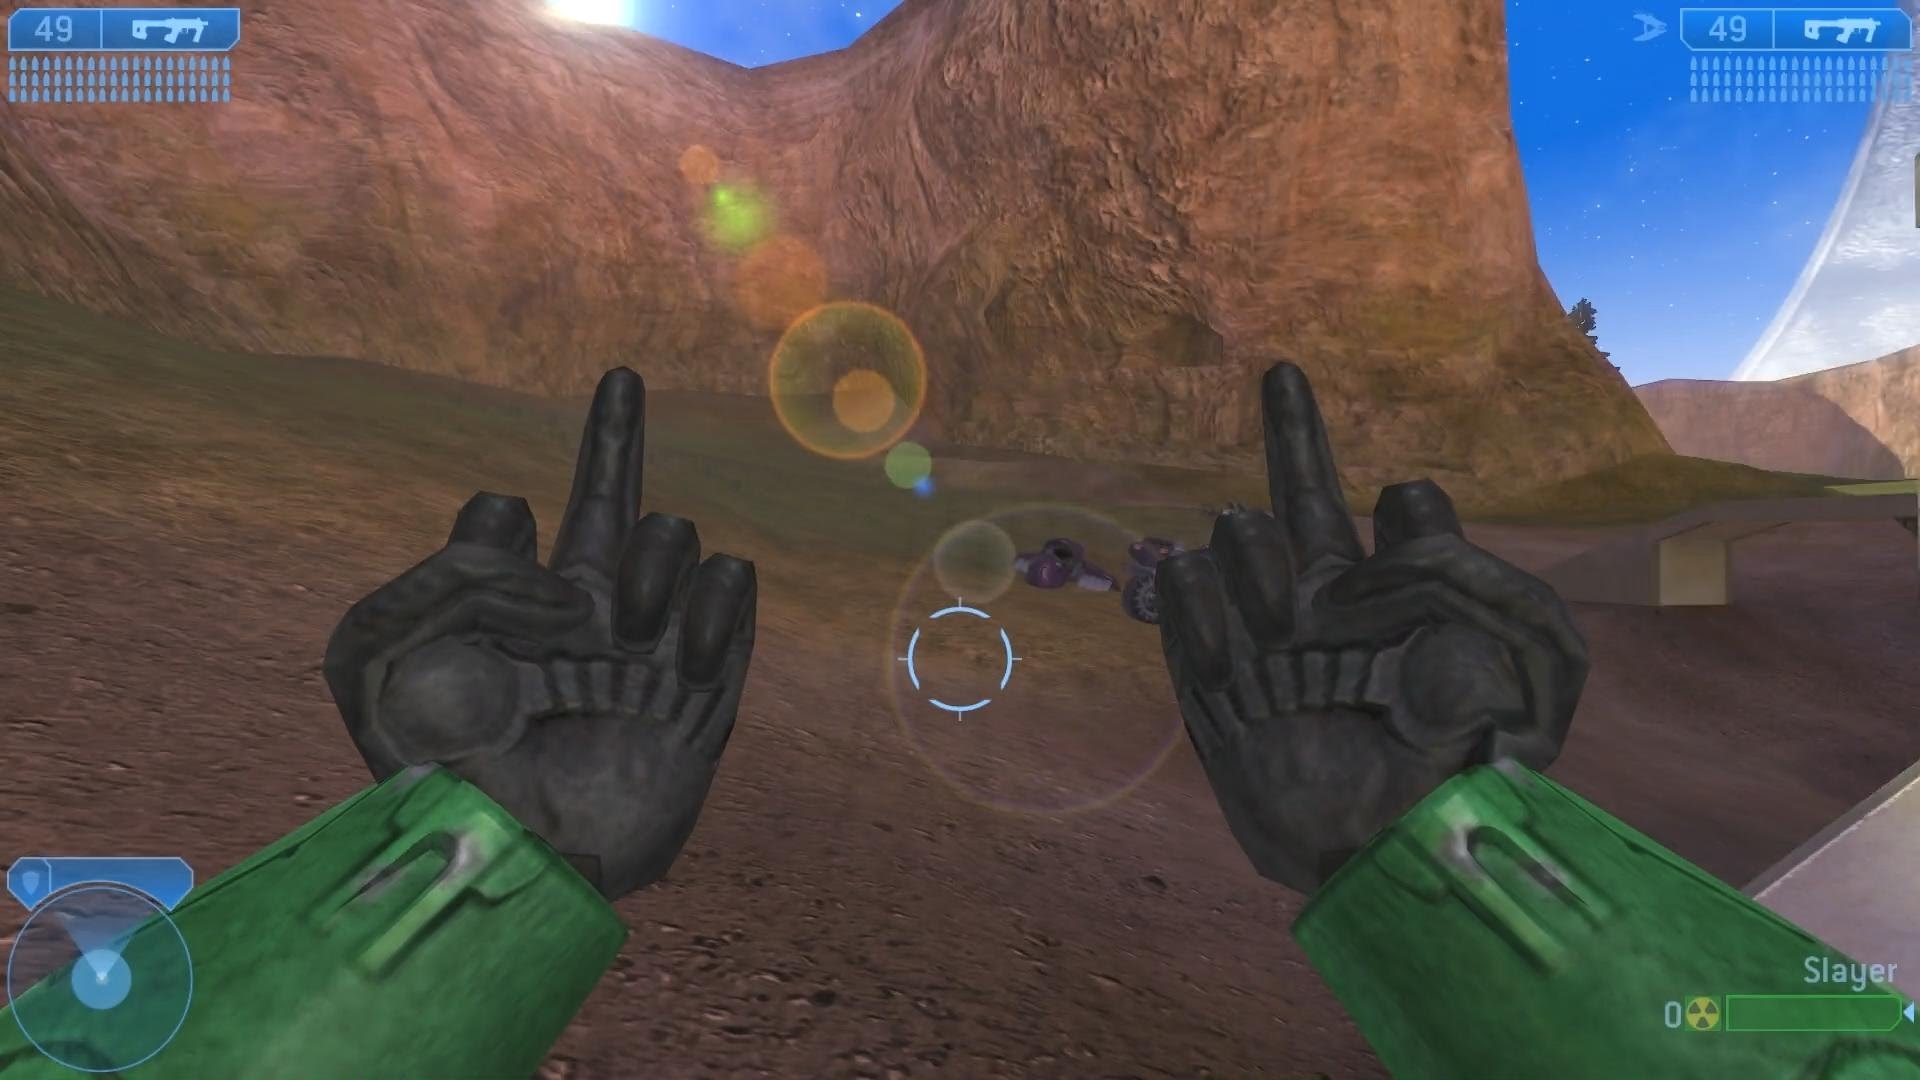 Halo 2 Backgrounds, Compatible - PC, Mobile, Gadgets| 1920x1080 px